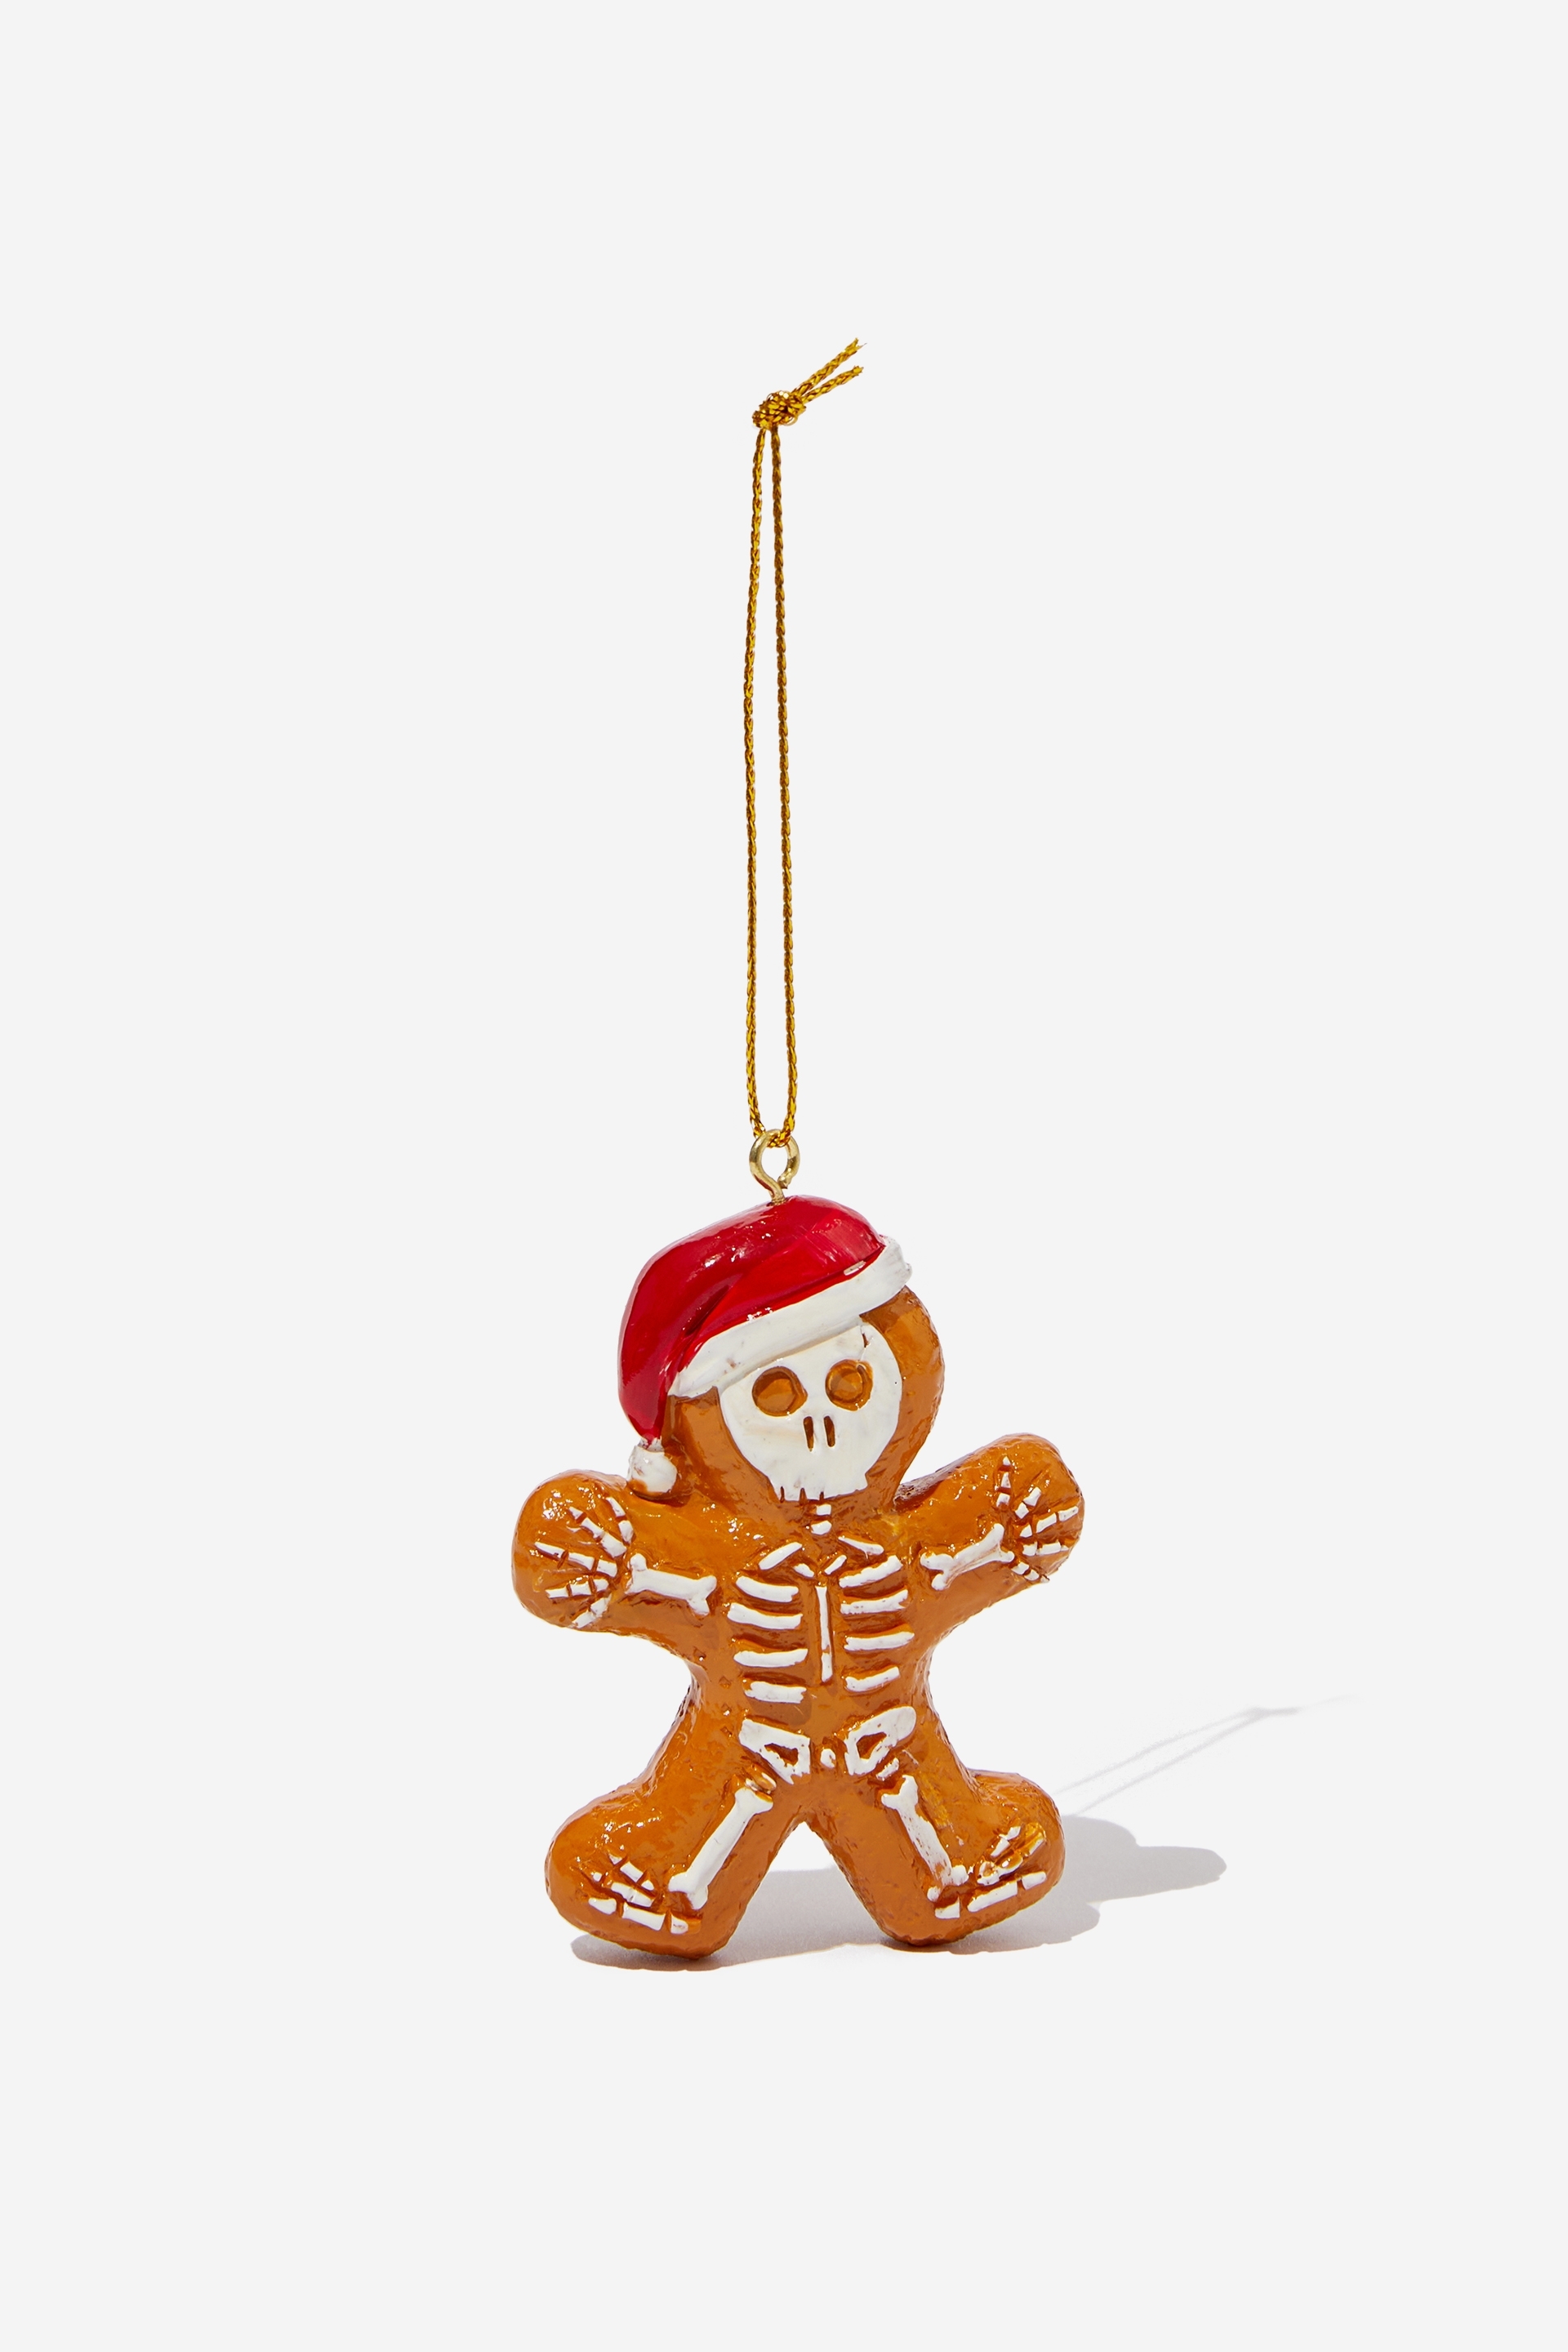 Typo - Resin Christmas Ornament - Skeleton gingy!